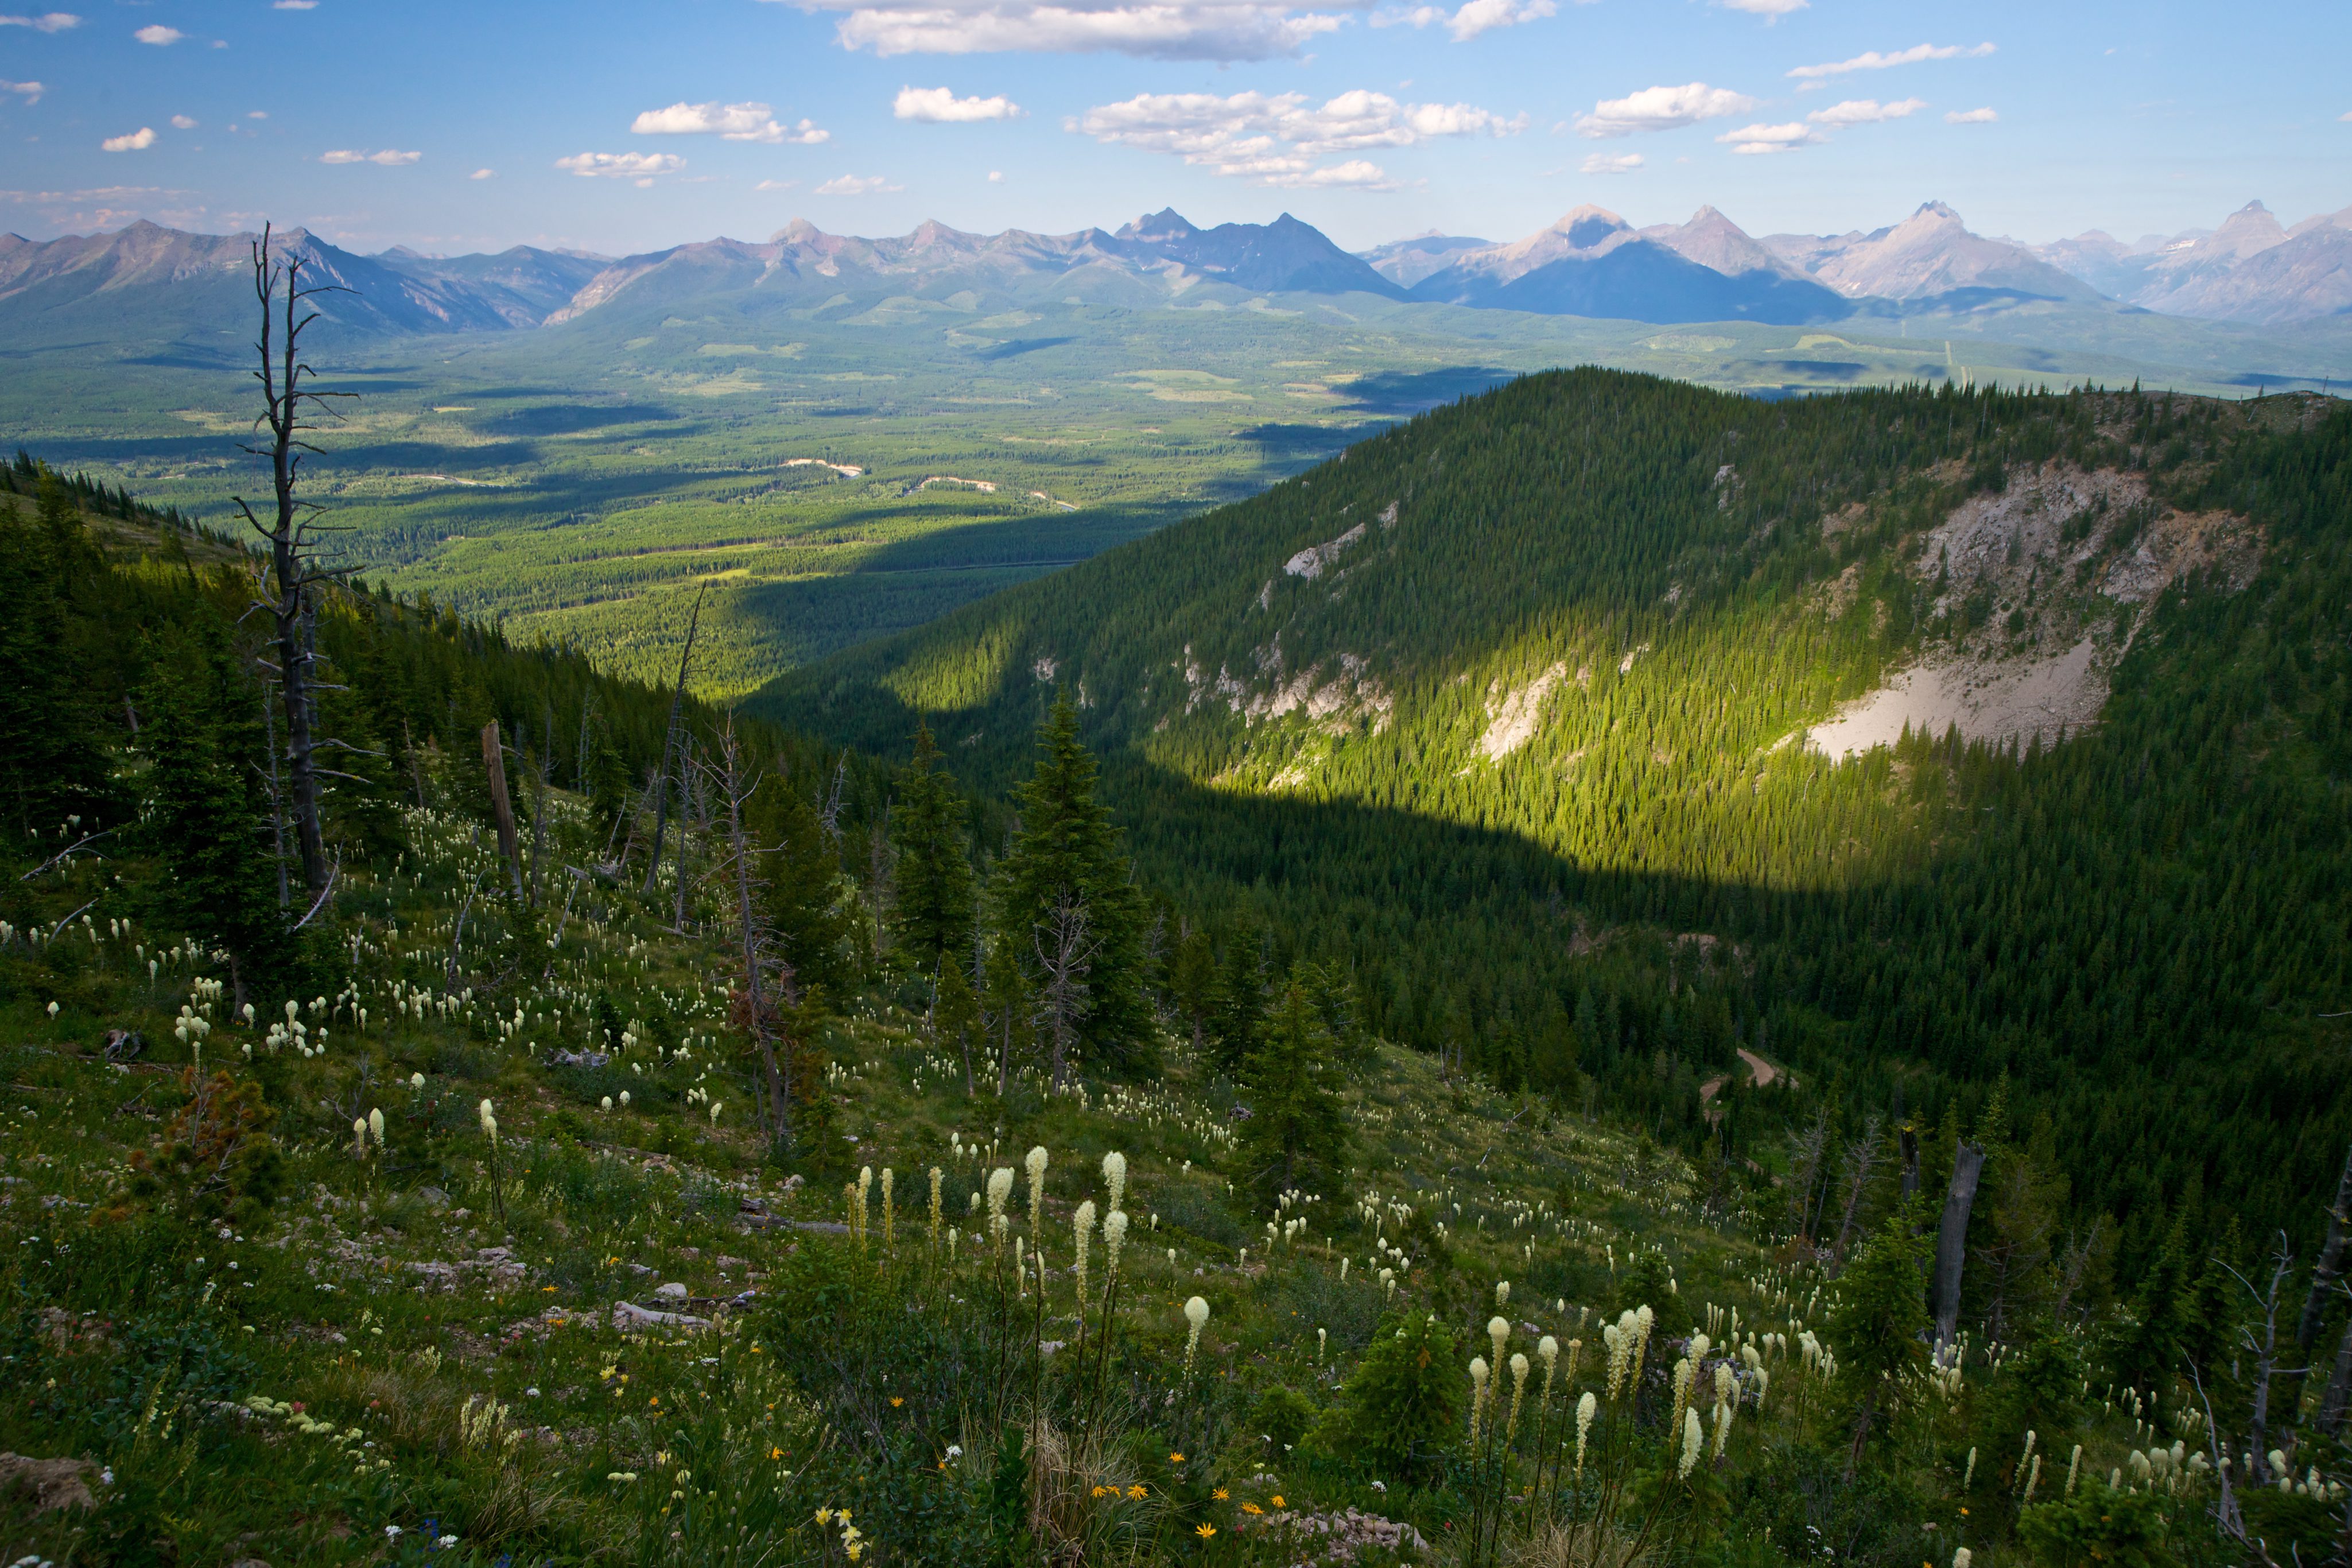 Flathead Valley from Mount Hefty, British Columbia, Canada